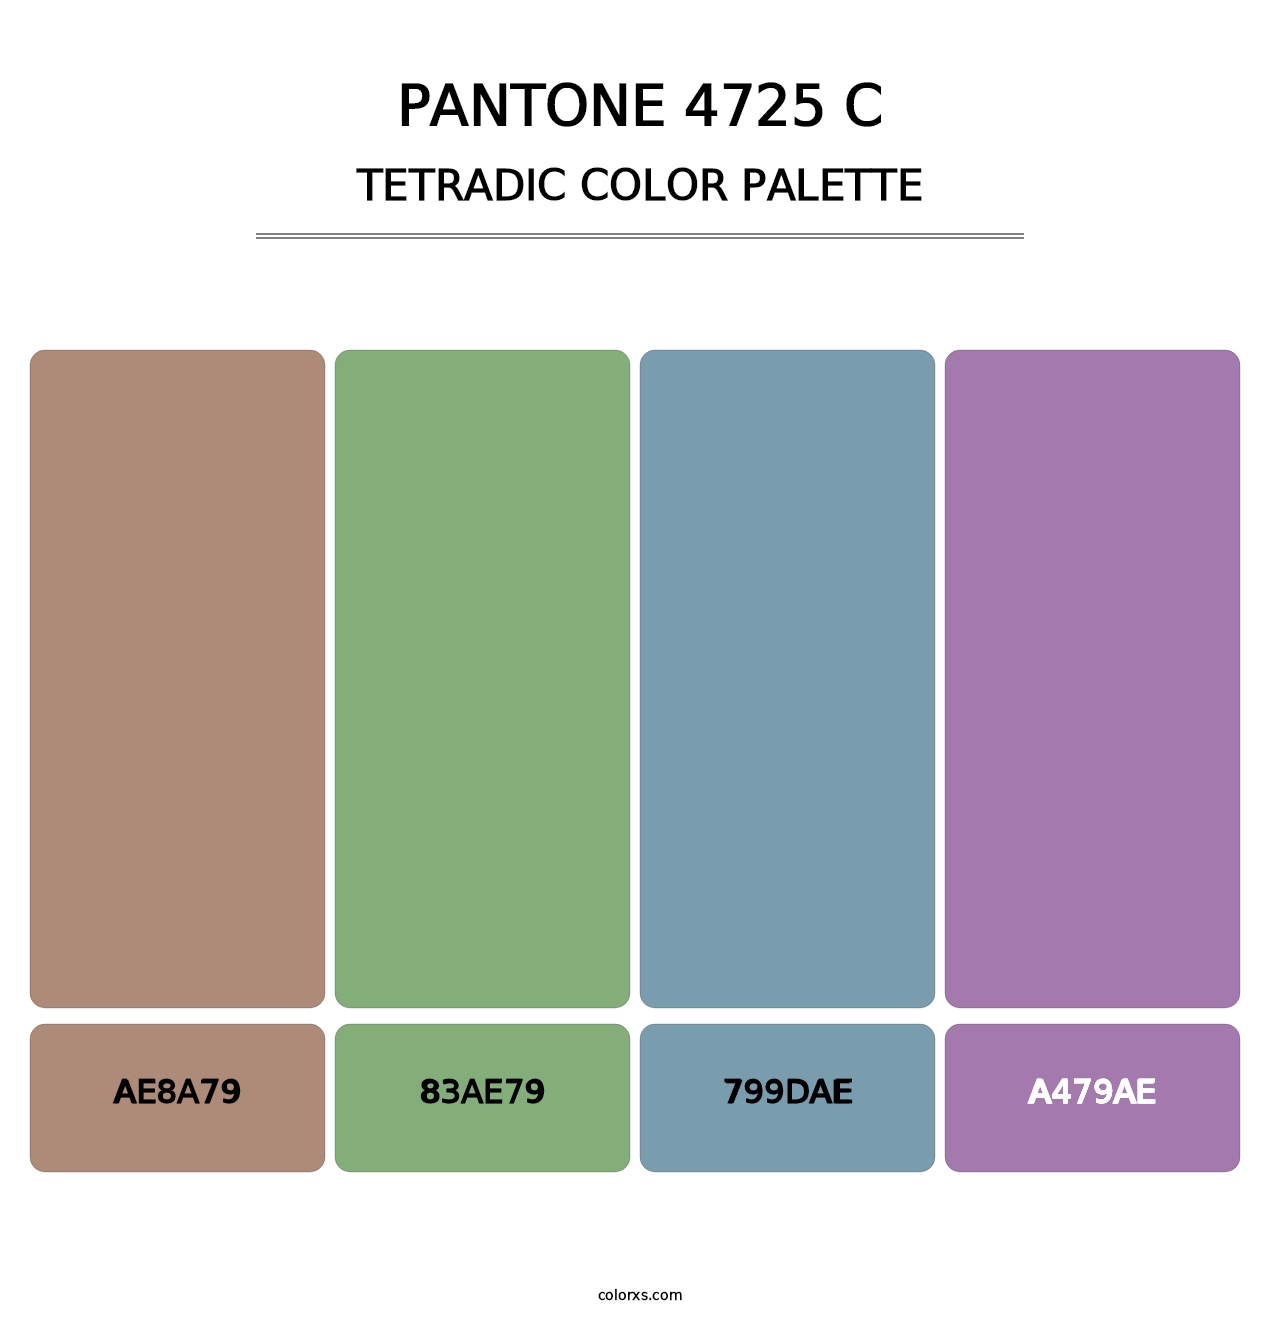 PANTONE 4725 C - Tetradic Color Palette